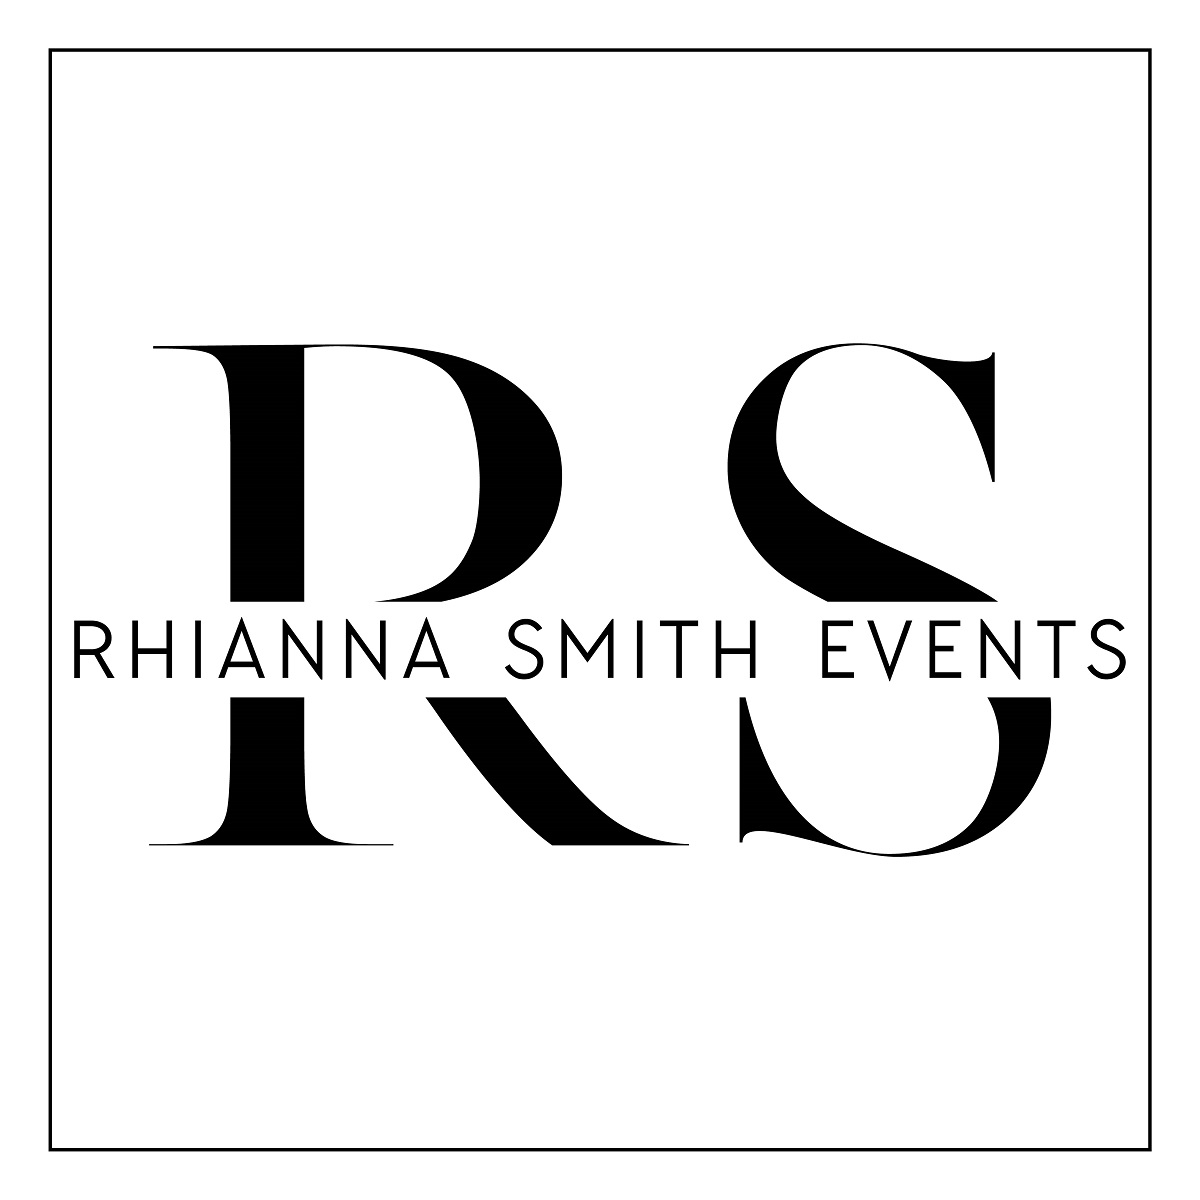 Rhianna Smith Events